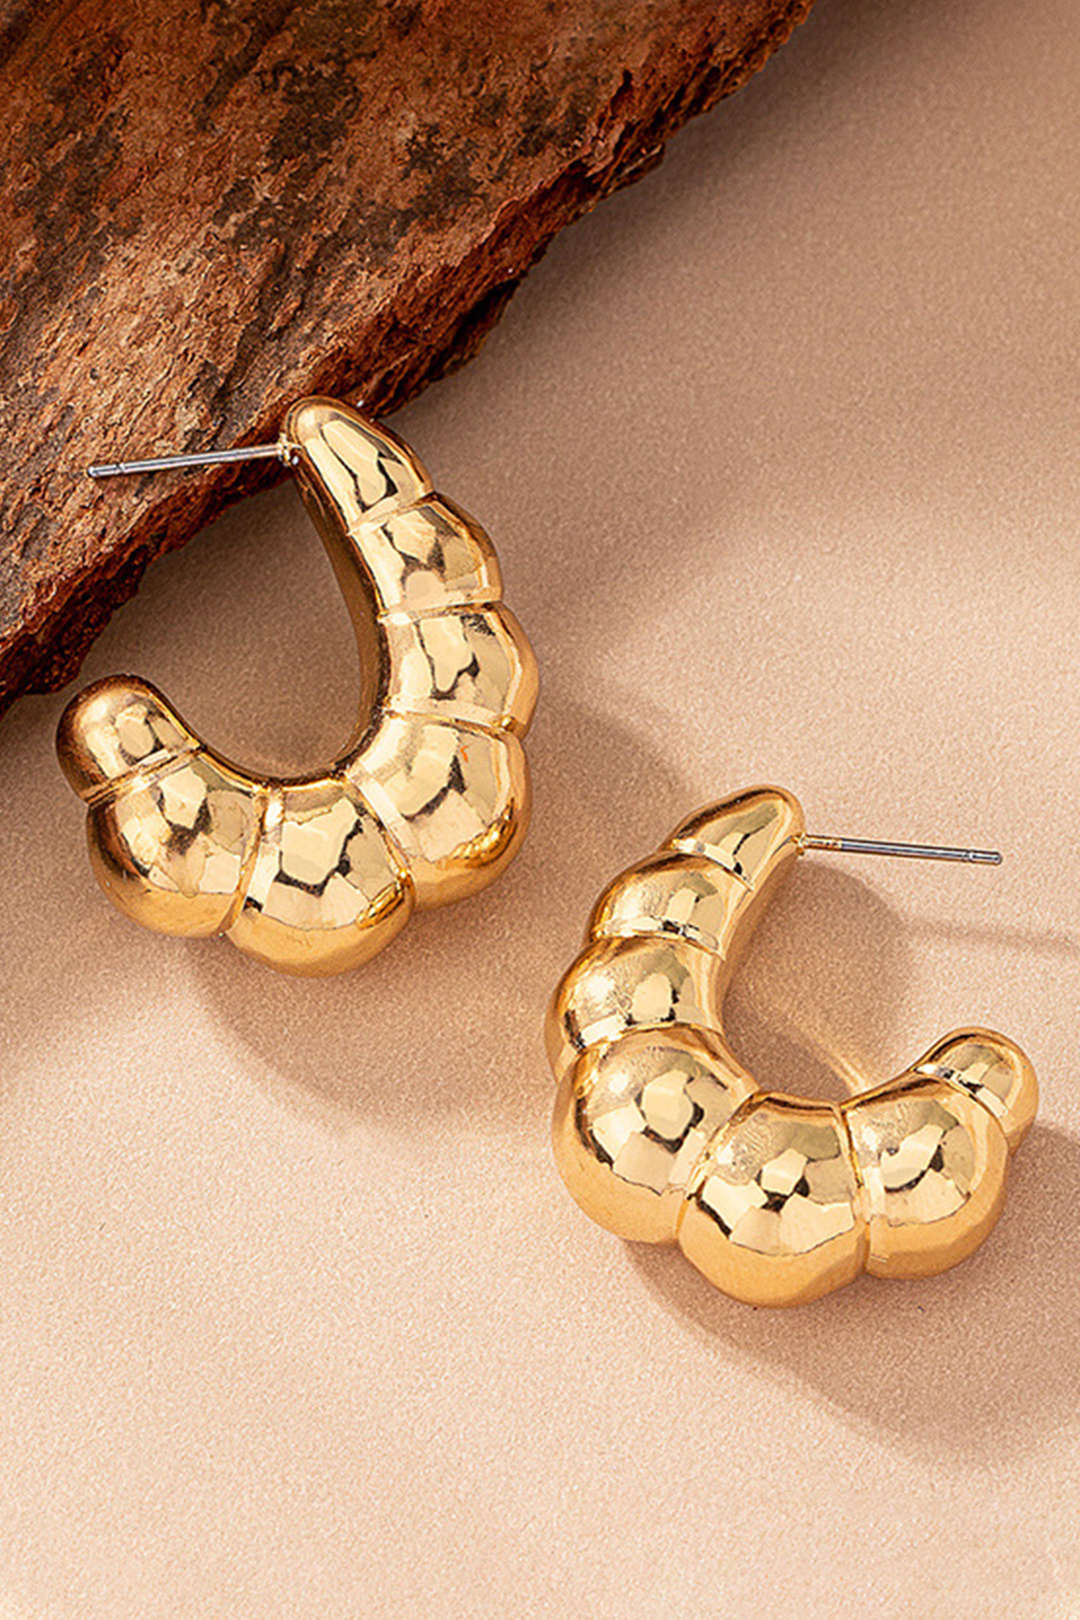 Horn-shaped Earrings